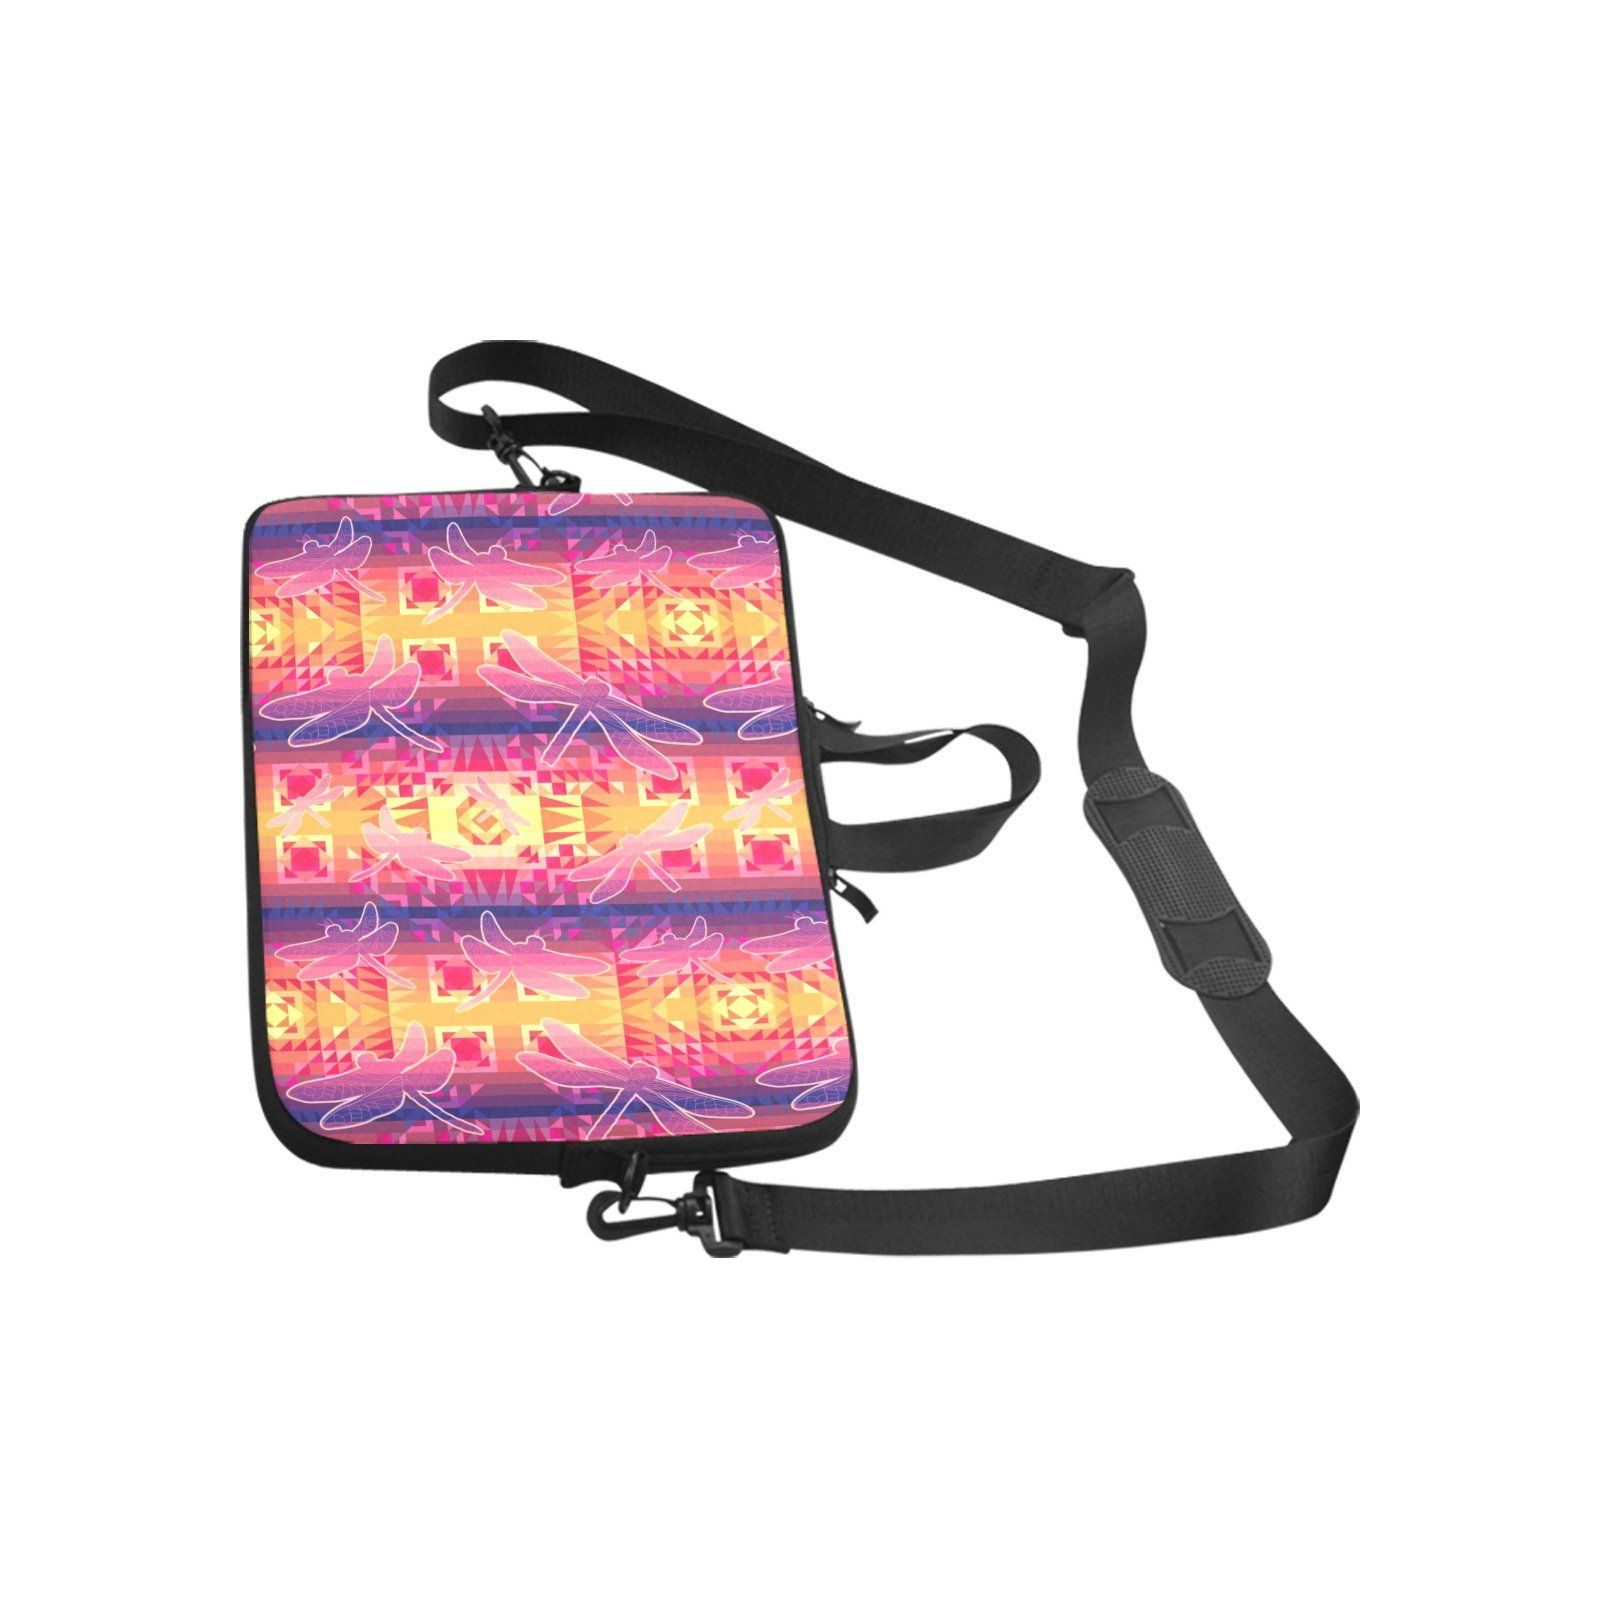 Kaleidoscope Dragonfly Laptop Handbags 14" bag e-joyer 